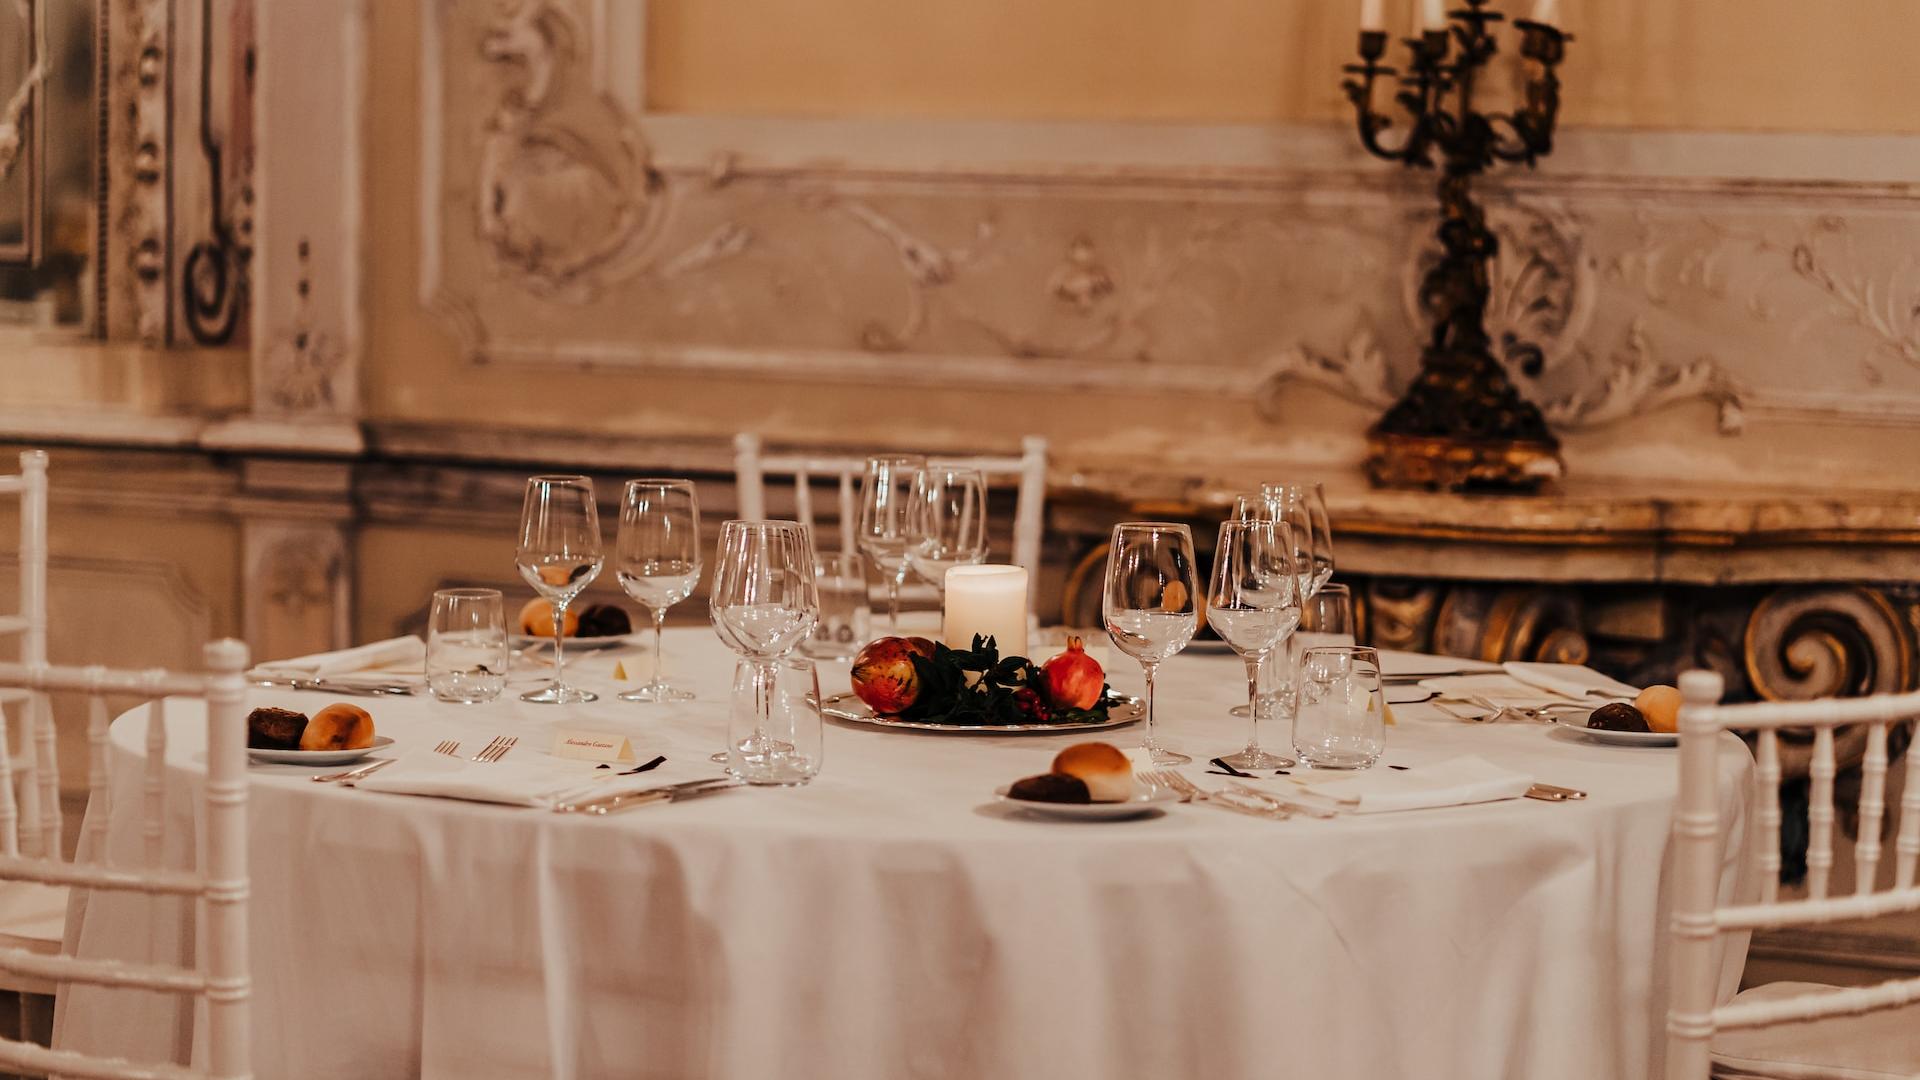 A table set for formal dinner